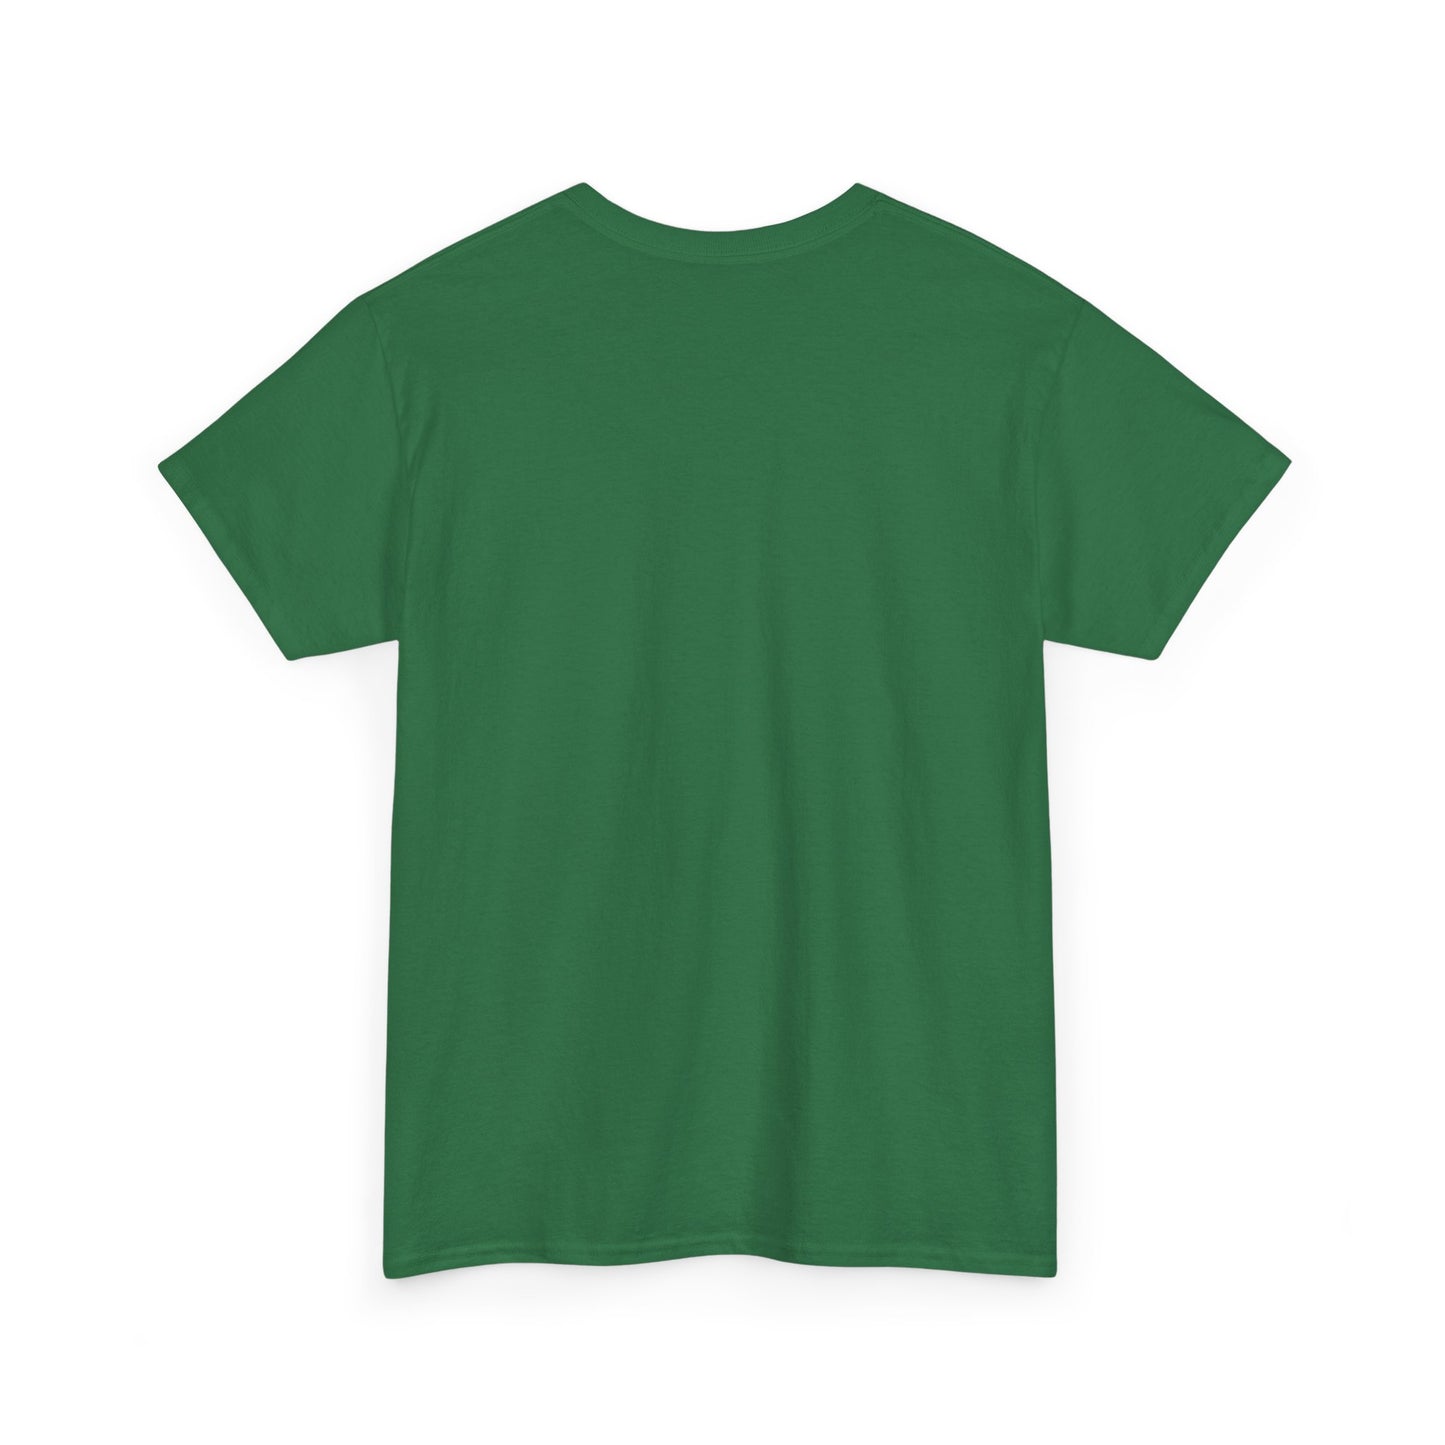 Save Palestine Club T shirt